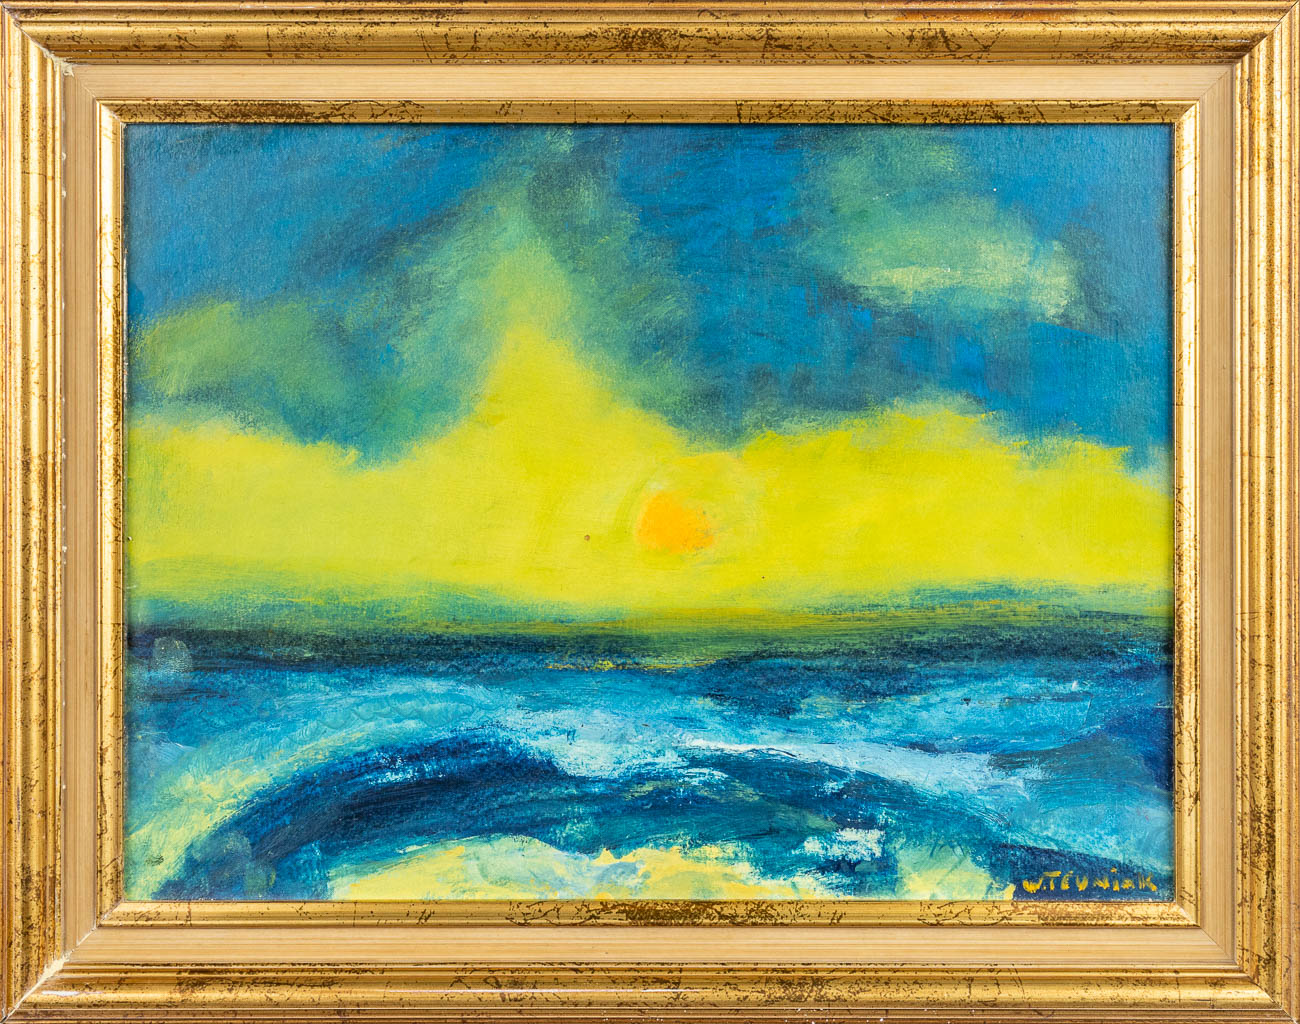 Walter TEUNINK (1941) '2 landscapes' oil on panel. (40 x 30 cm)